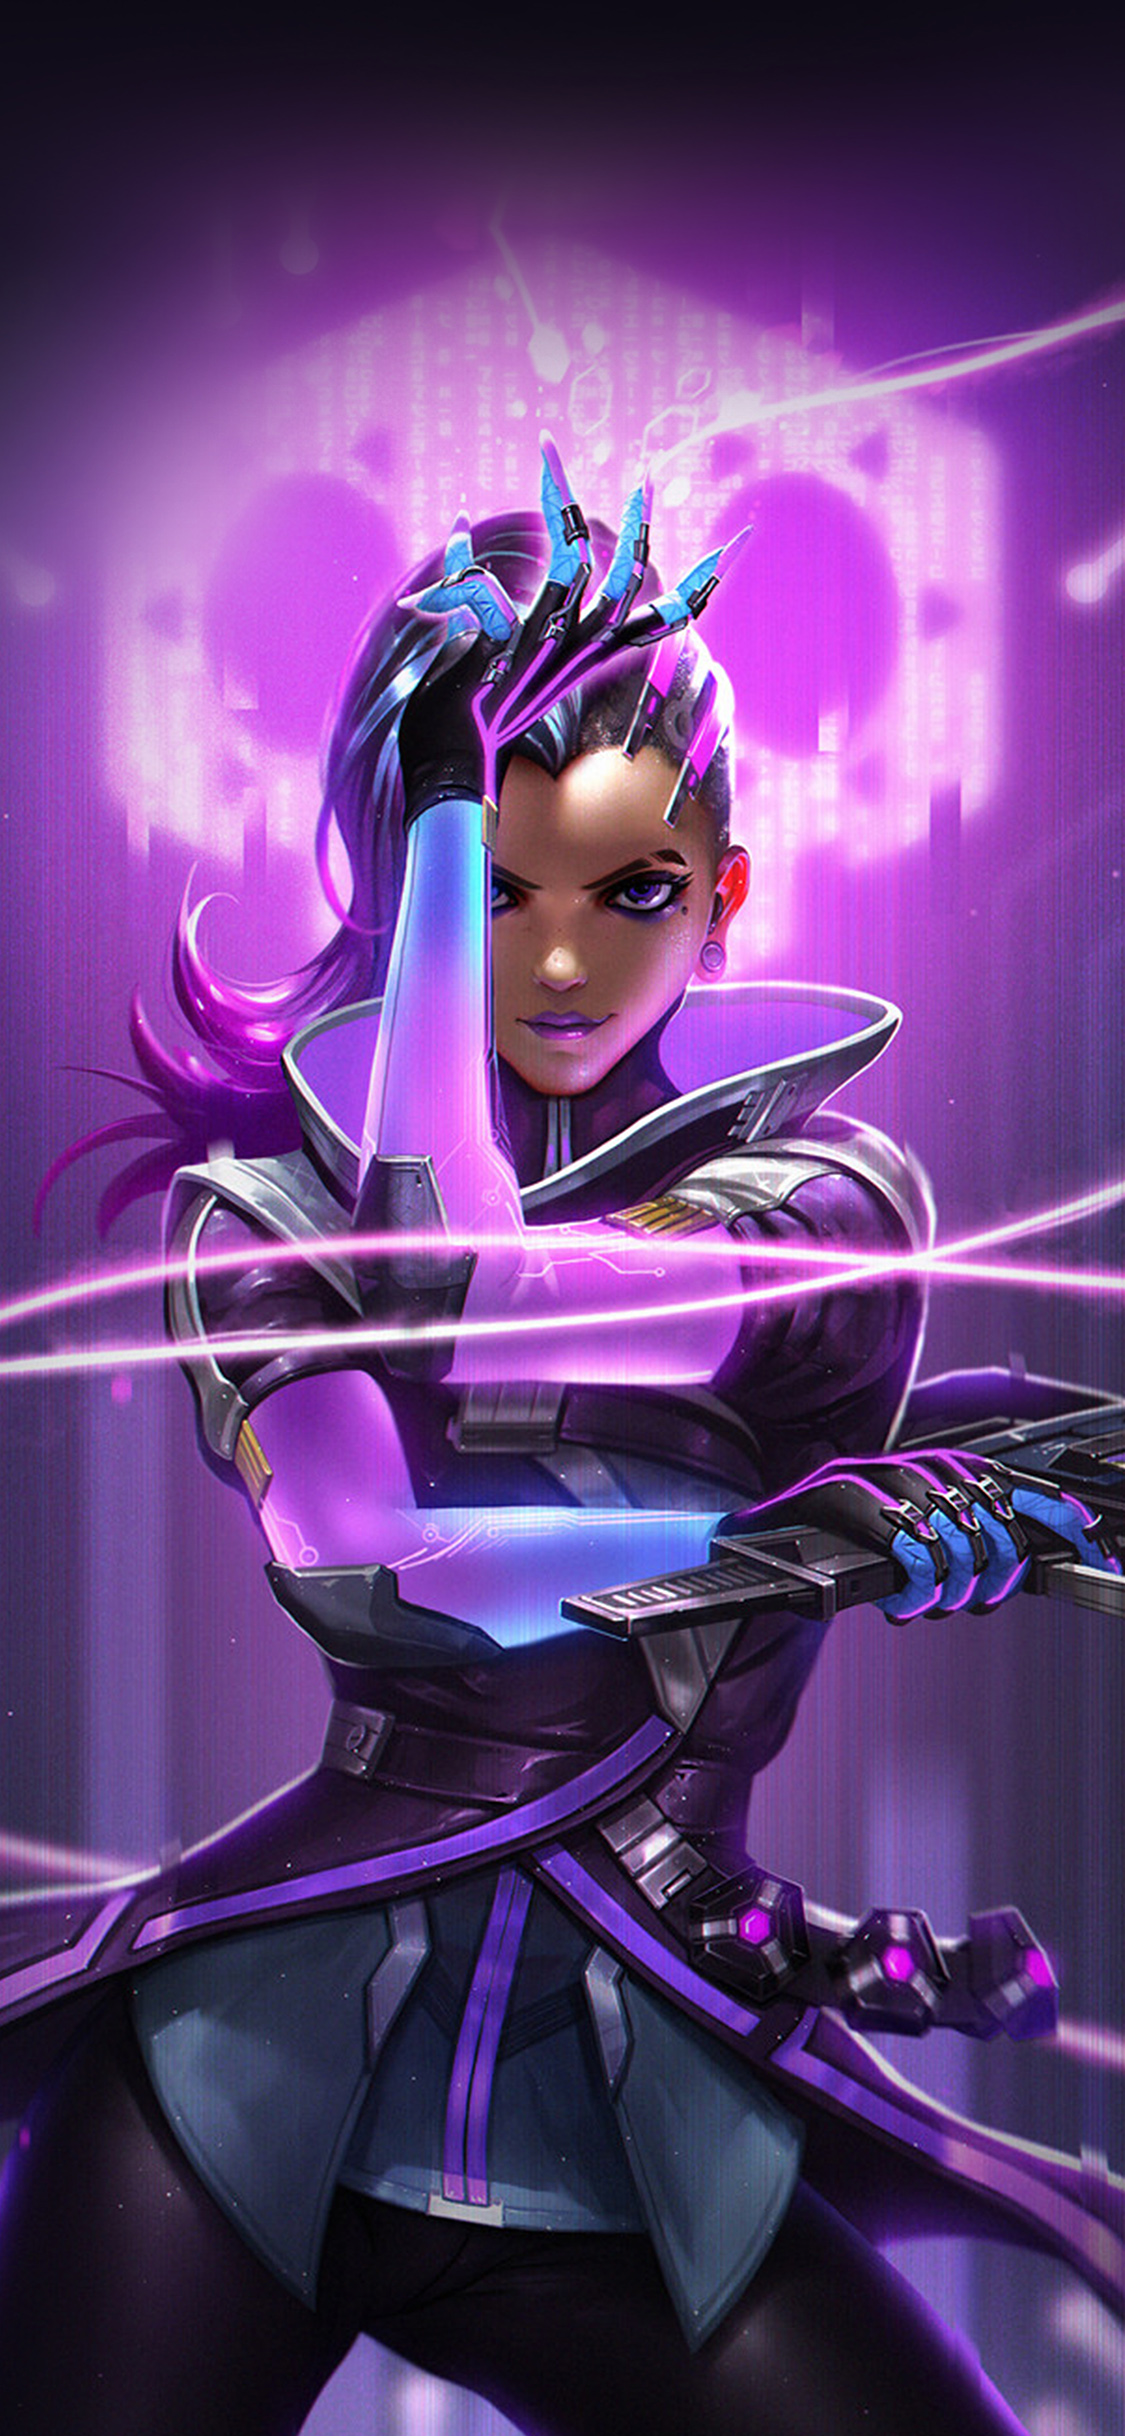 iPhone X wallpaper. liang xing overwatch sombra purple game hero illustration art